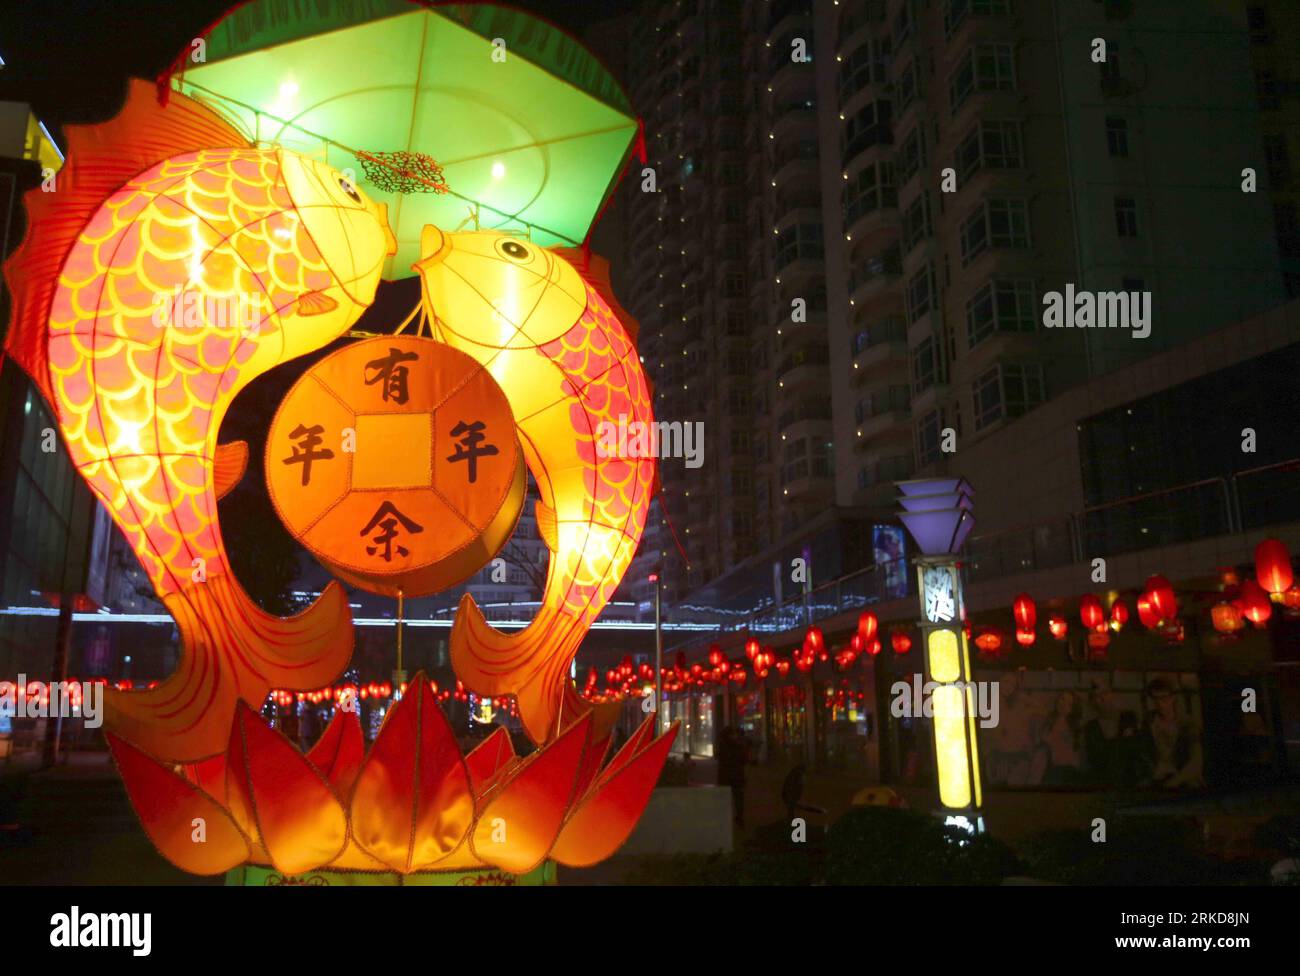 Bildnummer: 54887564  Datum: 07.02.2011  Copyright: imago/Xinhua (110208) -- RUIAN, Feb. 8, 2011 (Xinhua) -- Photo taken on Feb. 7, 2011 shows lanterns in Ruian City, east China s Zhejiang Province. A lantern show was held during the Spring Festival holiday here. (Xinhua/Zhuang Yingchang) (lb) CHINA-ZHEJIANG-SPRING FESTIVAL-LANTERNS (CN) PUBLICATIONxNOTxINxCHN Gesellschaft kbdig xcb 2011 quer o0 Laterne Objekte Fische    Bildnummer 54887564 Date 07 02 2011 Copyright Imago XINHUA  Ruian Feb 8 2011 XINHUA Photo Taken ON Feb 7 2011 Shows Lanterns in Ruian City East China S Zhejiang Province a Lan Stock Photo